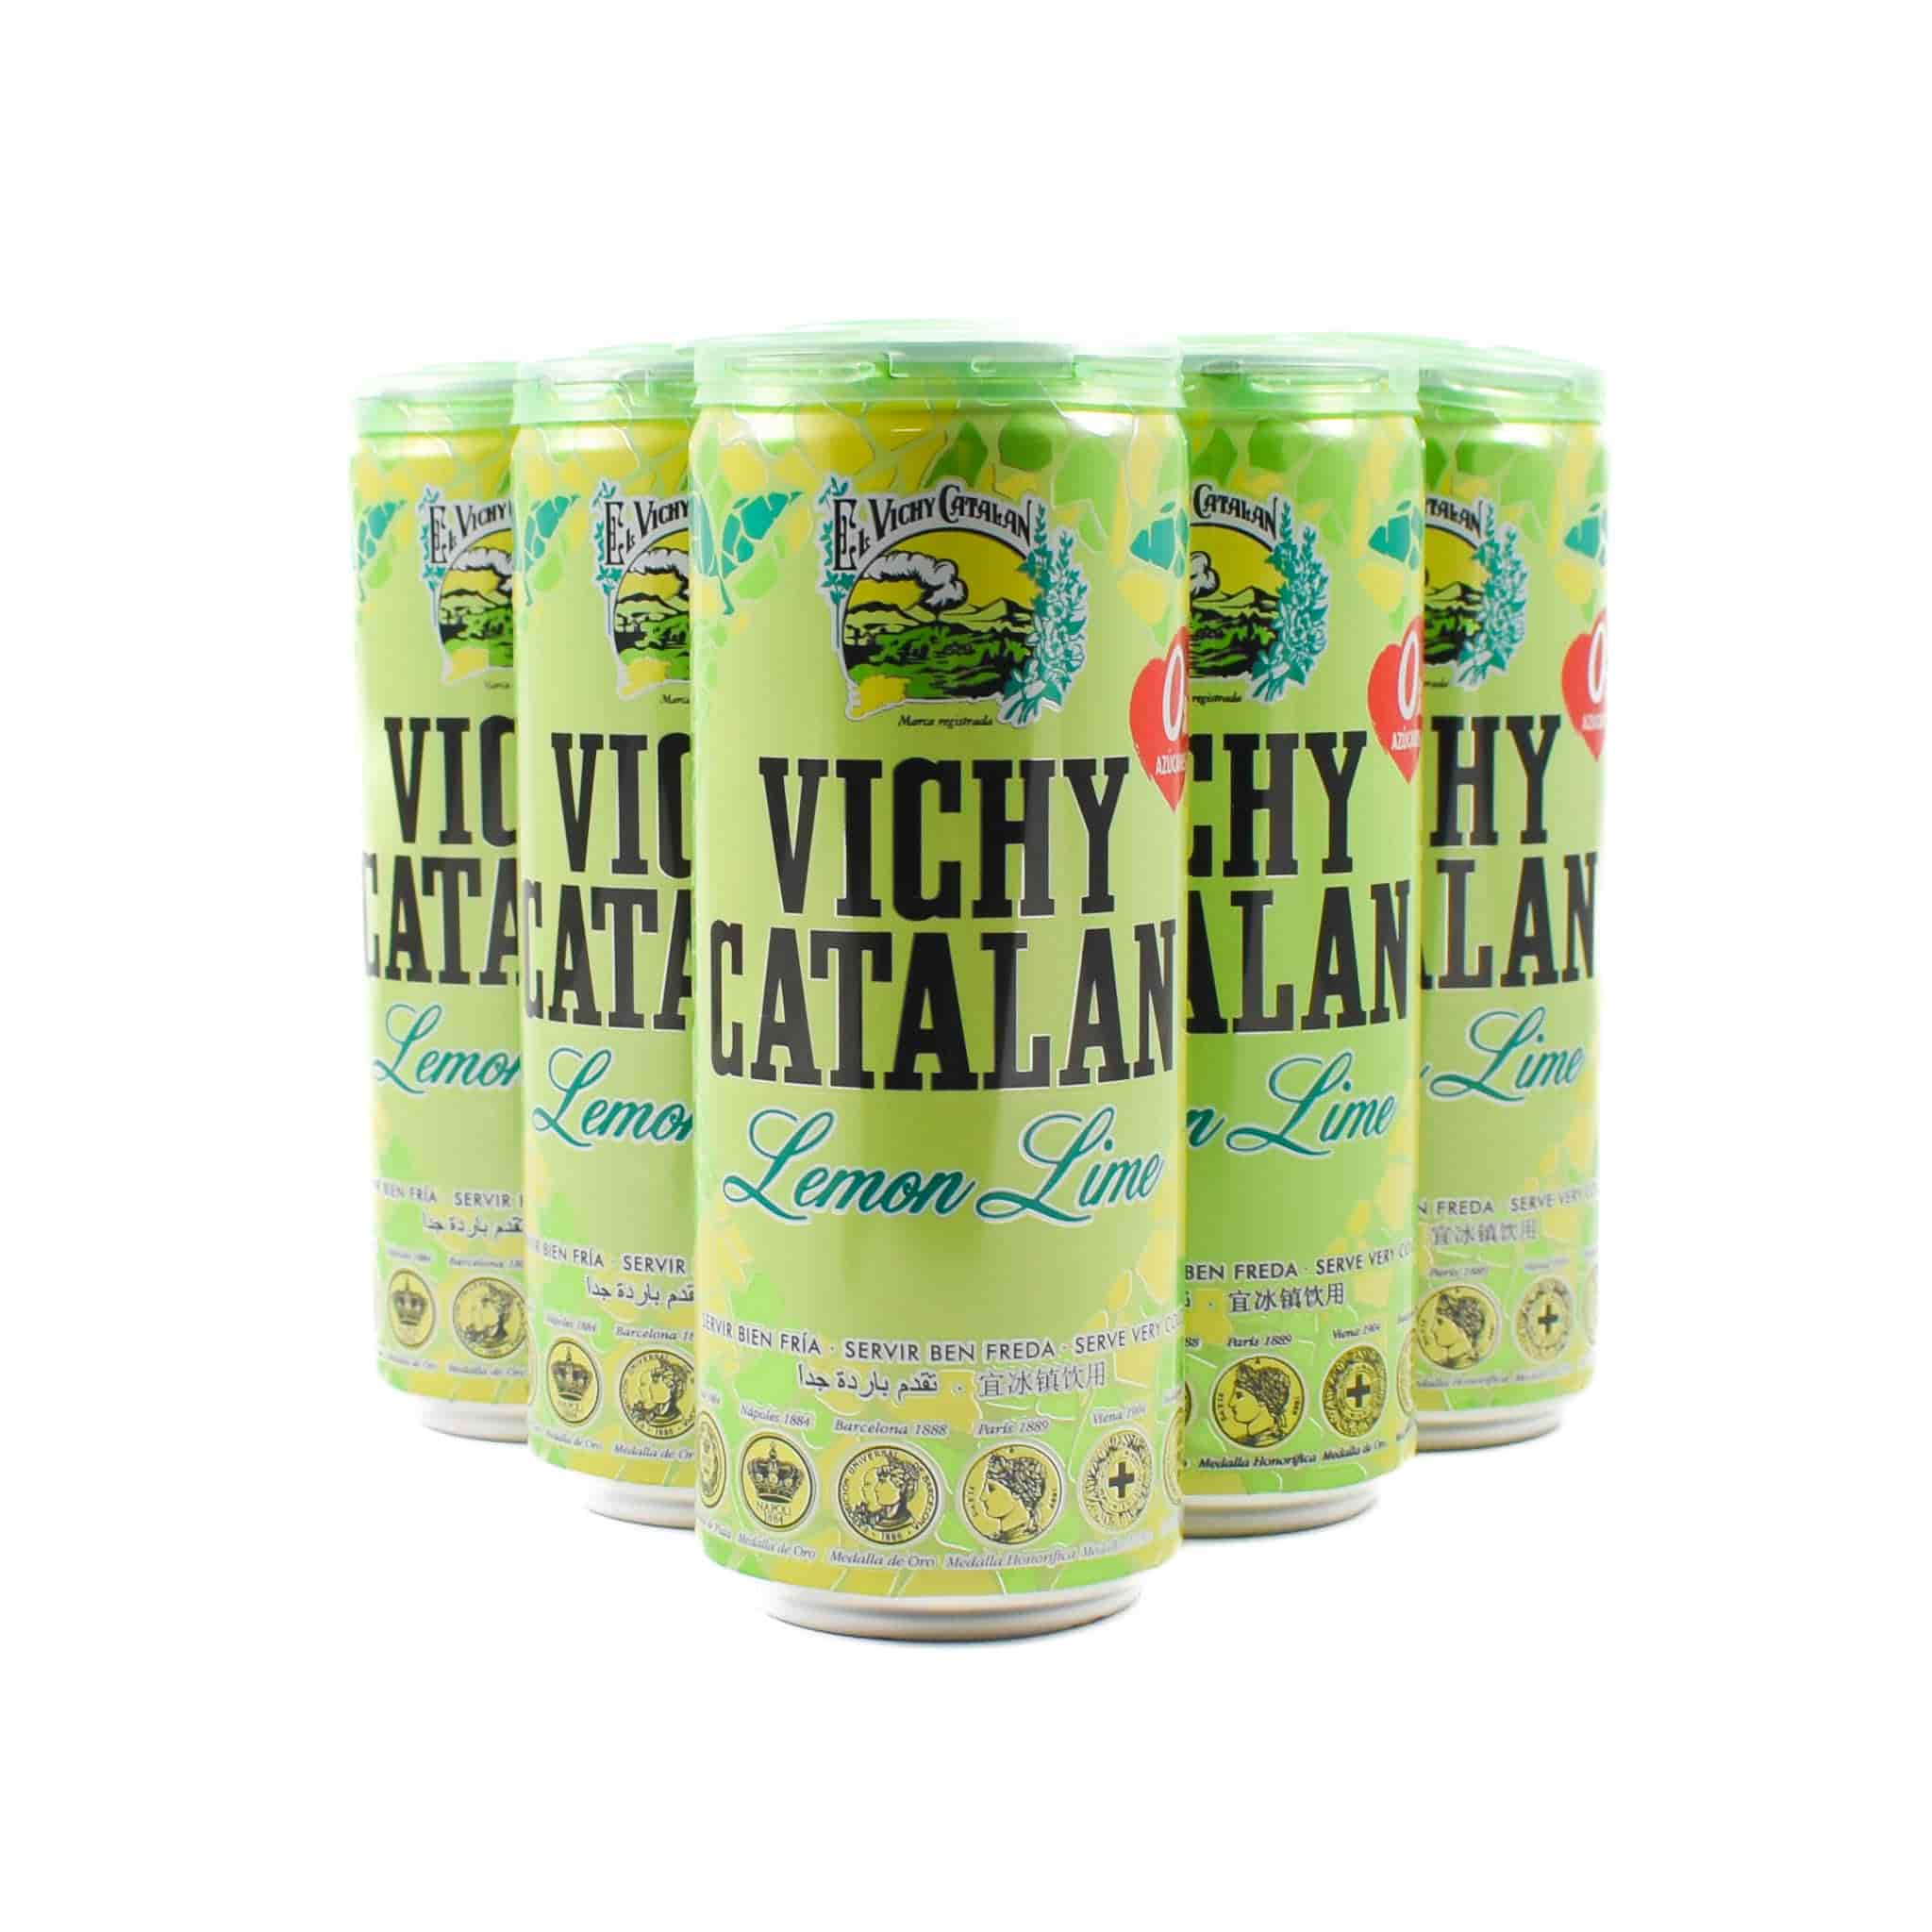 6x Vichy Catalan Sparkling Lemon & Lime Mineral Water, 330ml